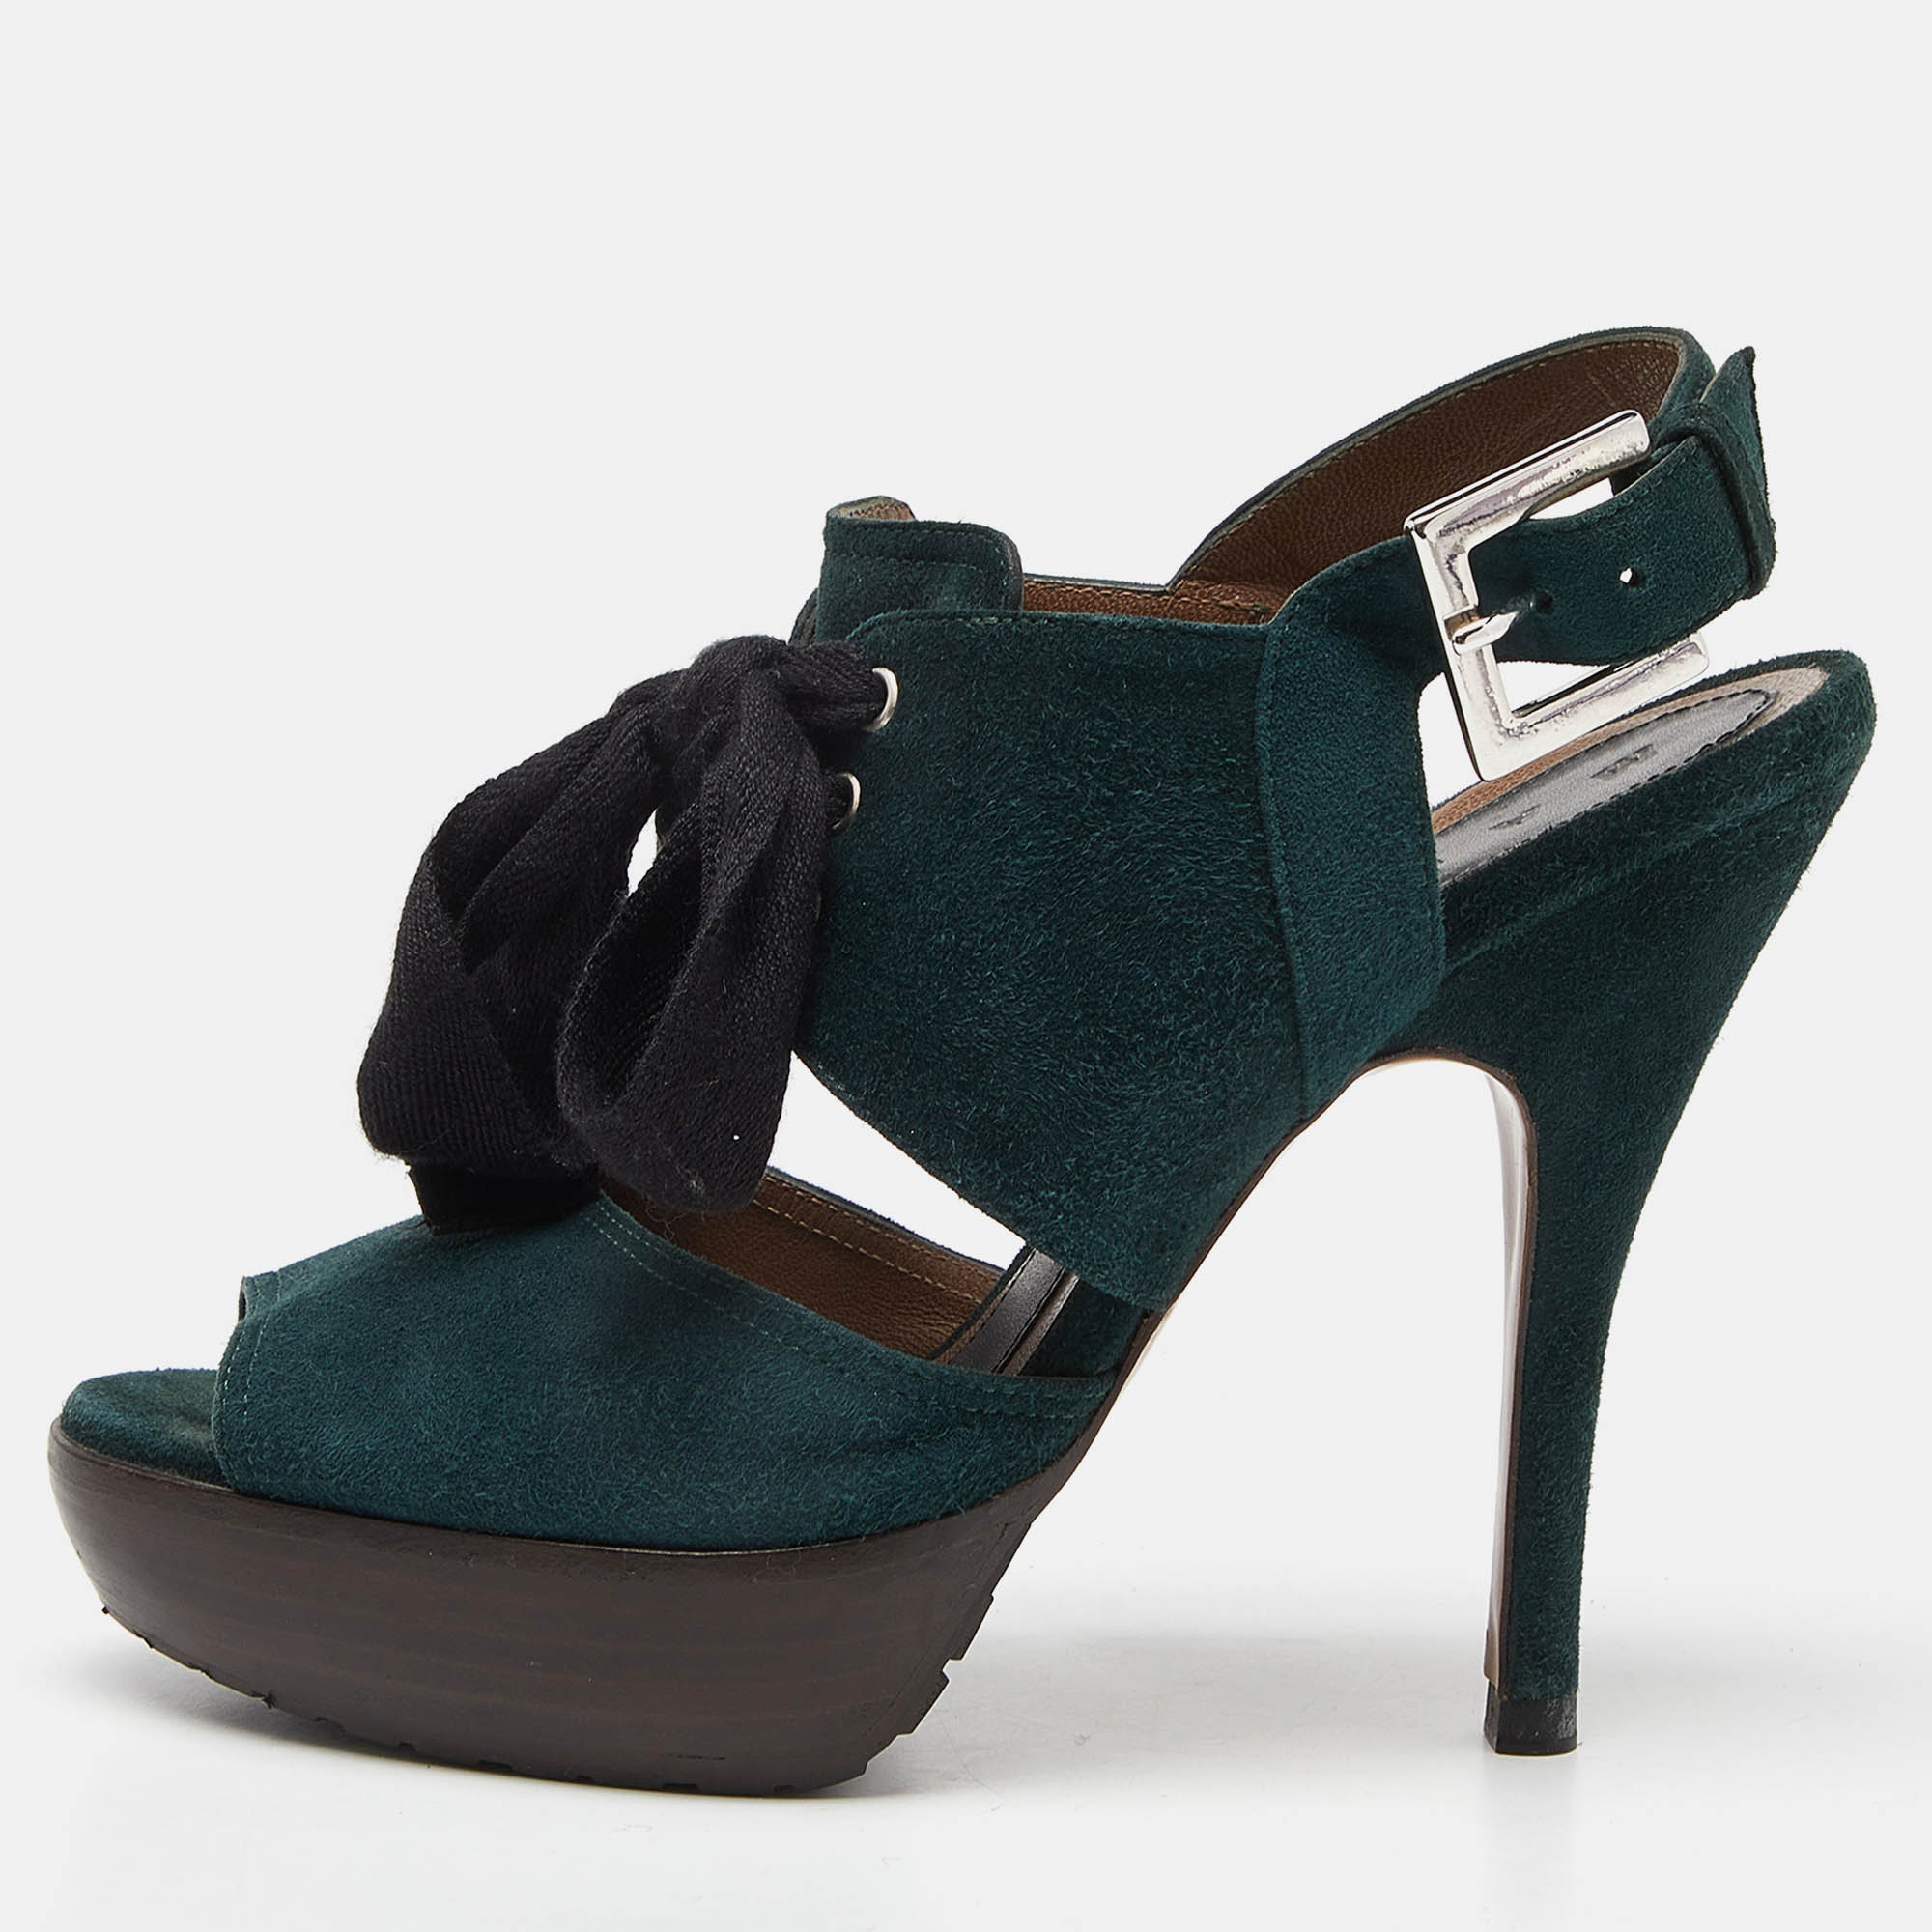 Marni green suede peep toe slingback sandals size 36